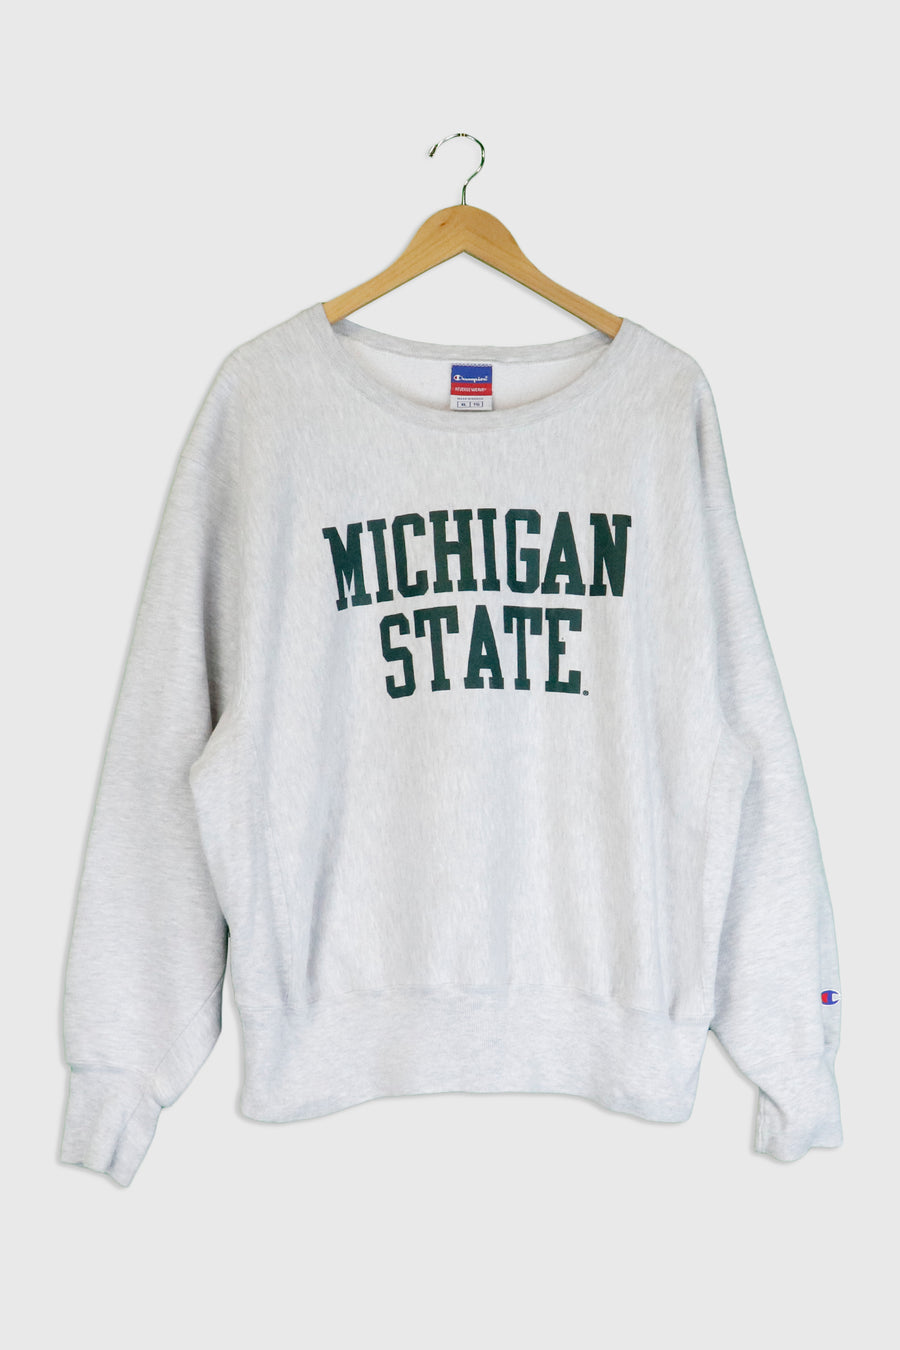 Vintage Champion Michigan State Reverse Weave Vinyl Sweatshirt Sz XL